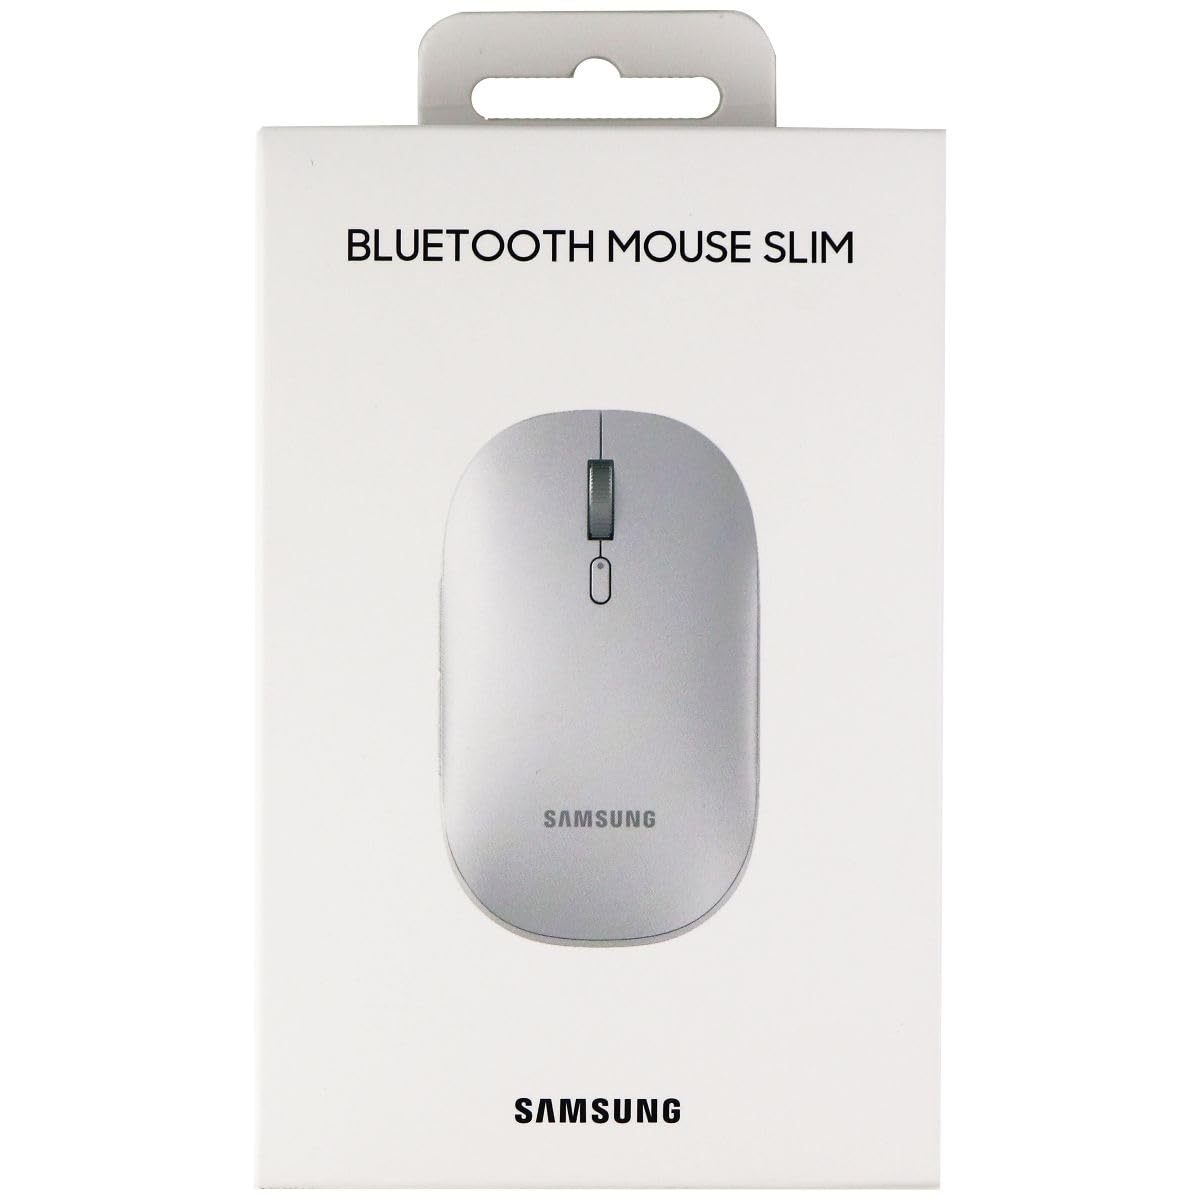 SAMSUNG Bluetooth Mouse Slim - Silver (2021)